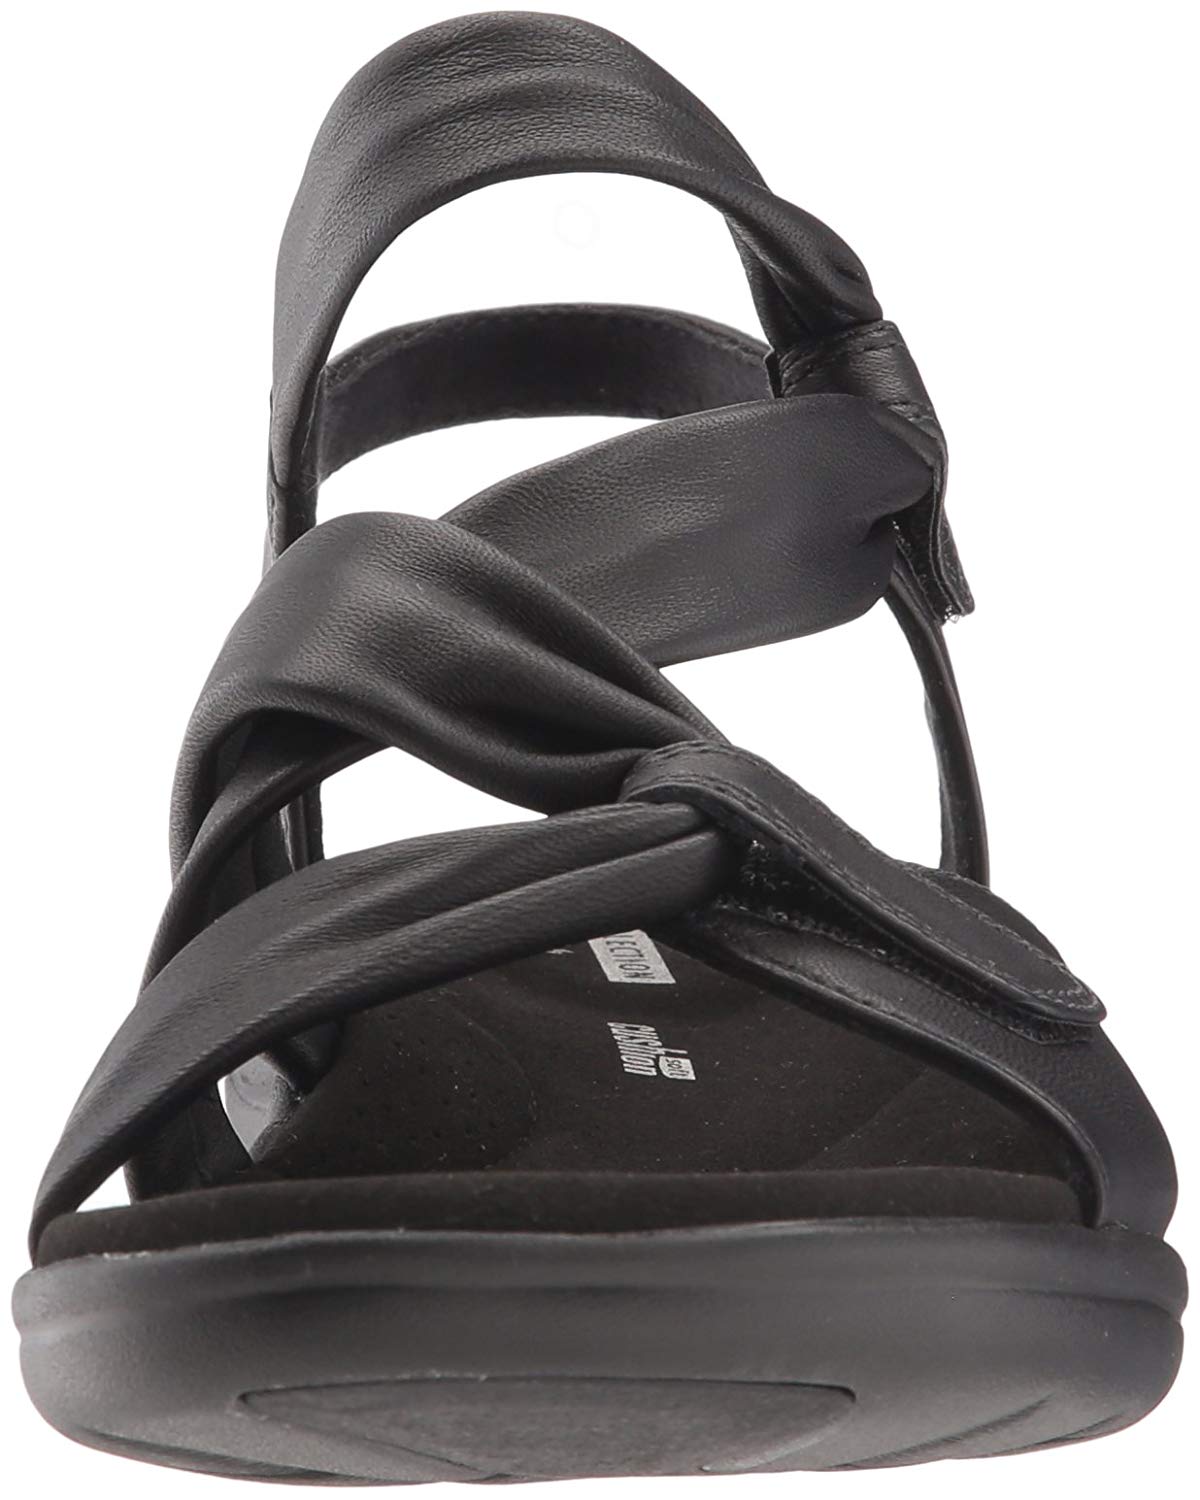 CLARKS Women's Saylie Moon Sandal, Black Leather, Size 10.0 V5p9 | eBay